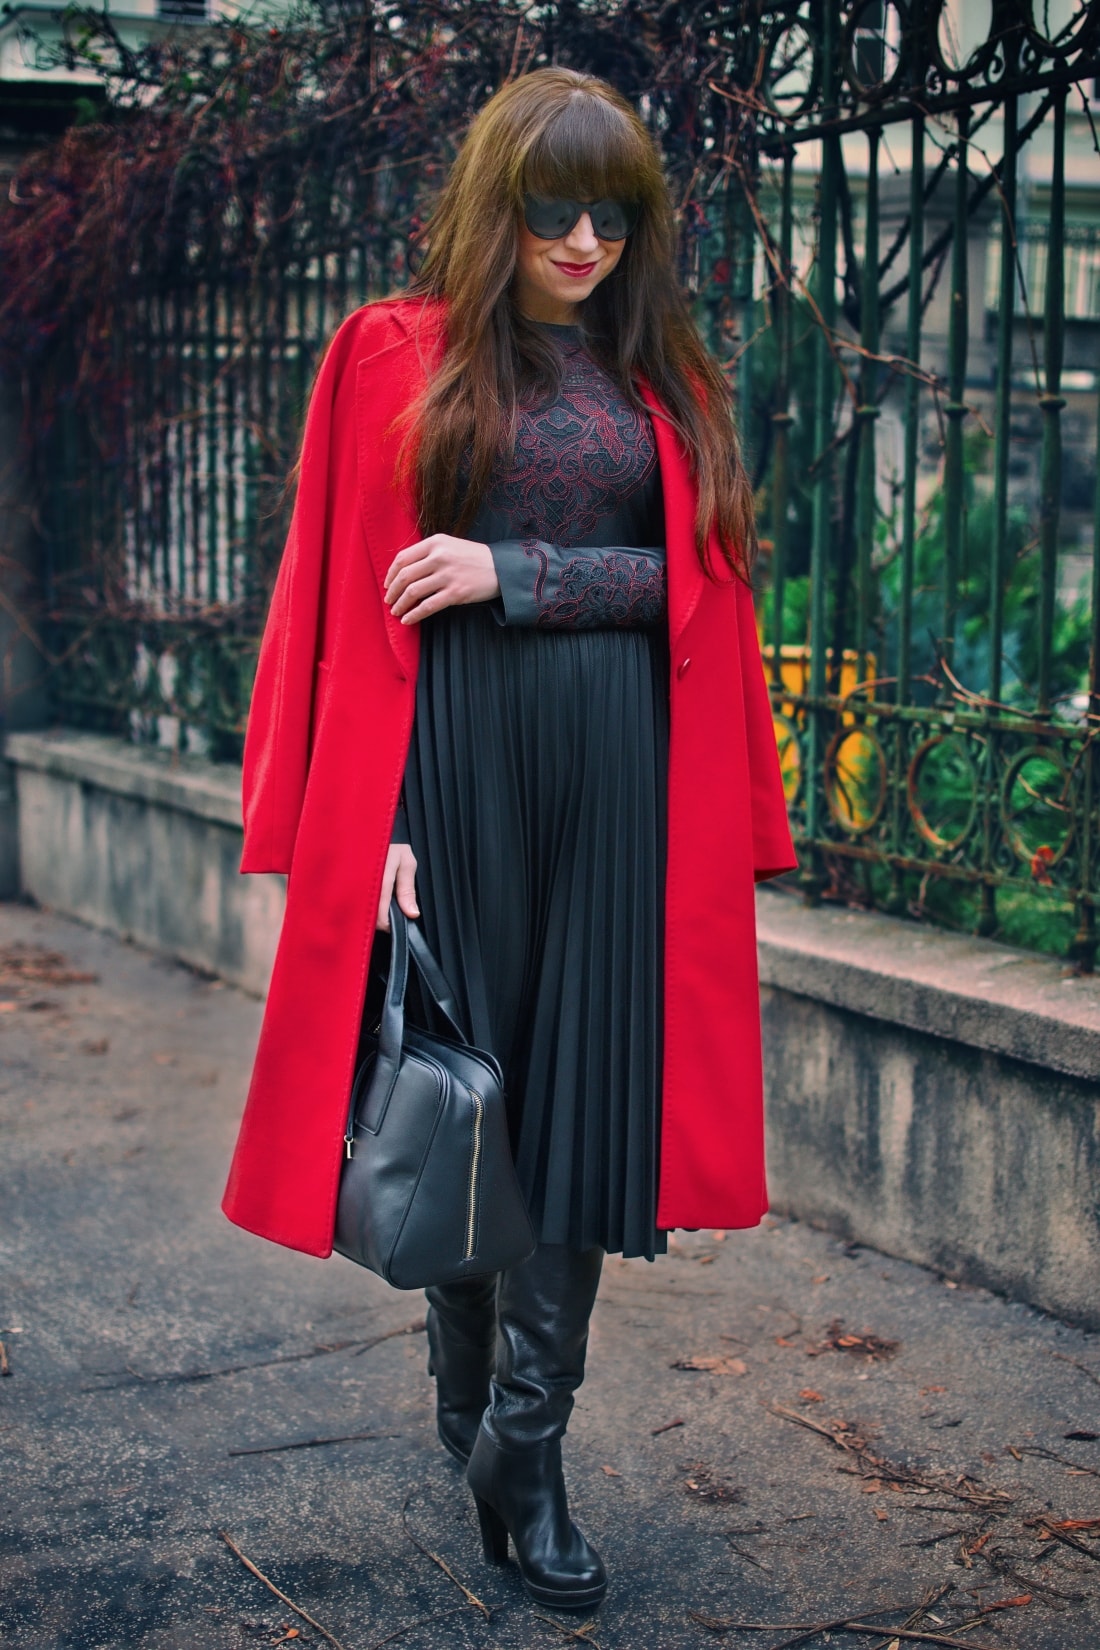 Čierne plisované šaty_Katharine-fashion is beautiful_blog 7_Červený kabát Zara_Kabelka Parfois_Katarína Jakubčová_Fashion blogger